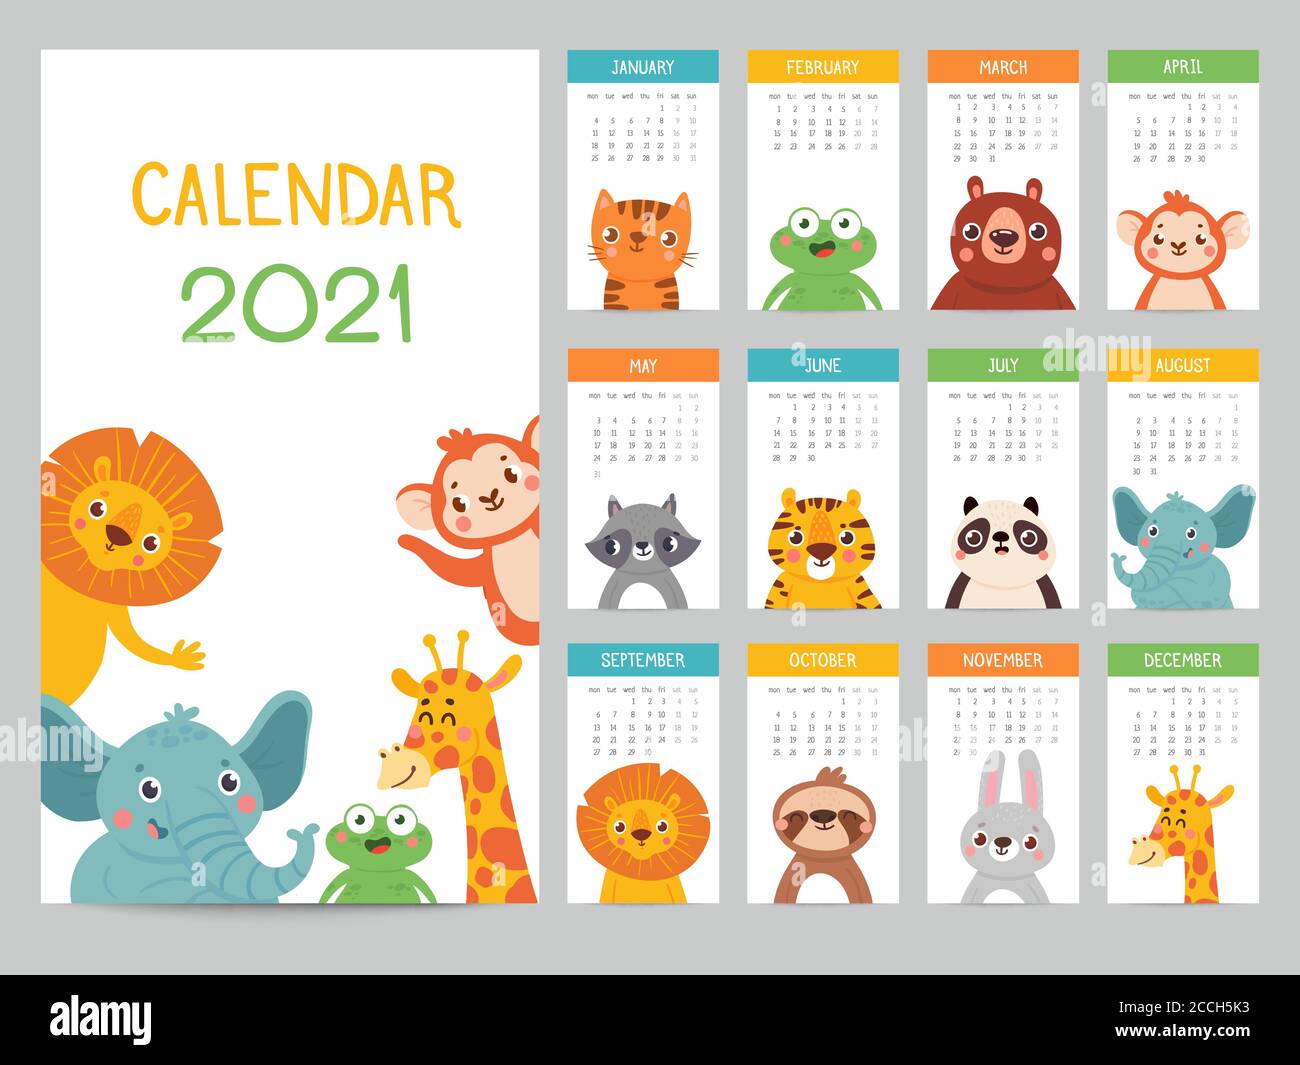 Animals calendar 2021. Cute monthly calendar with different animals